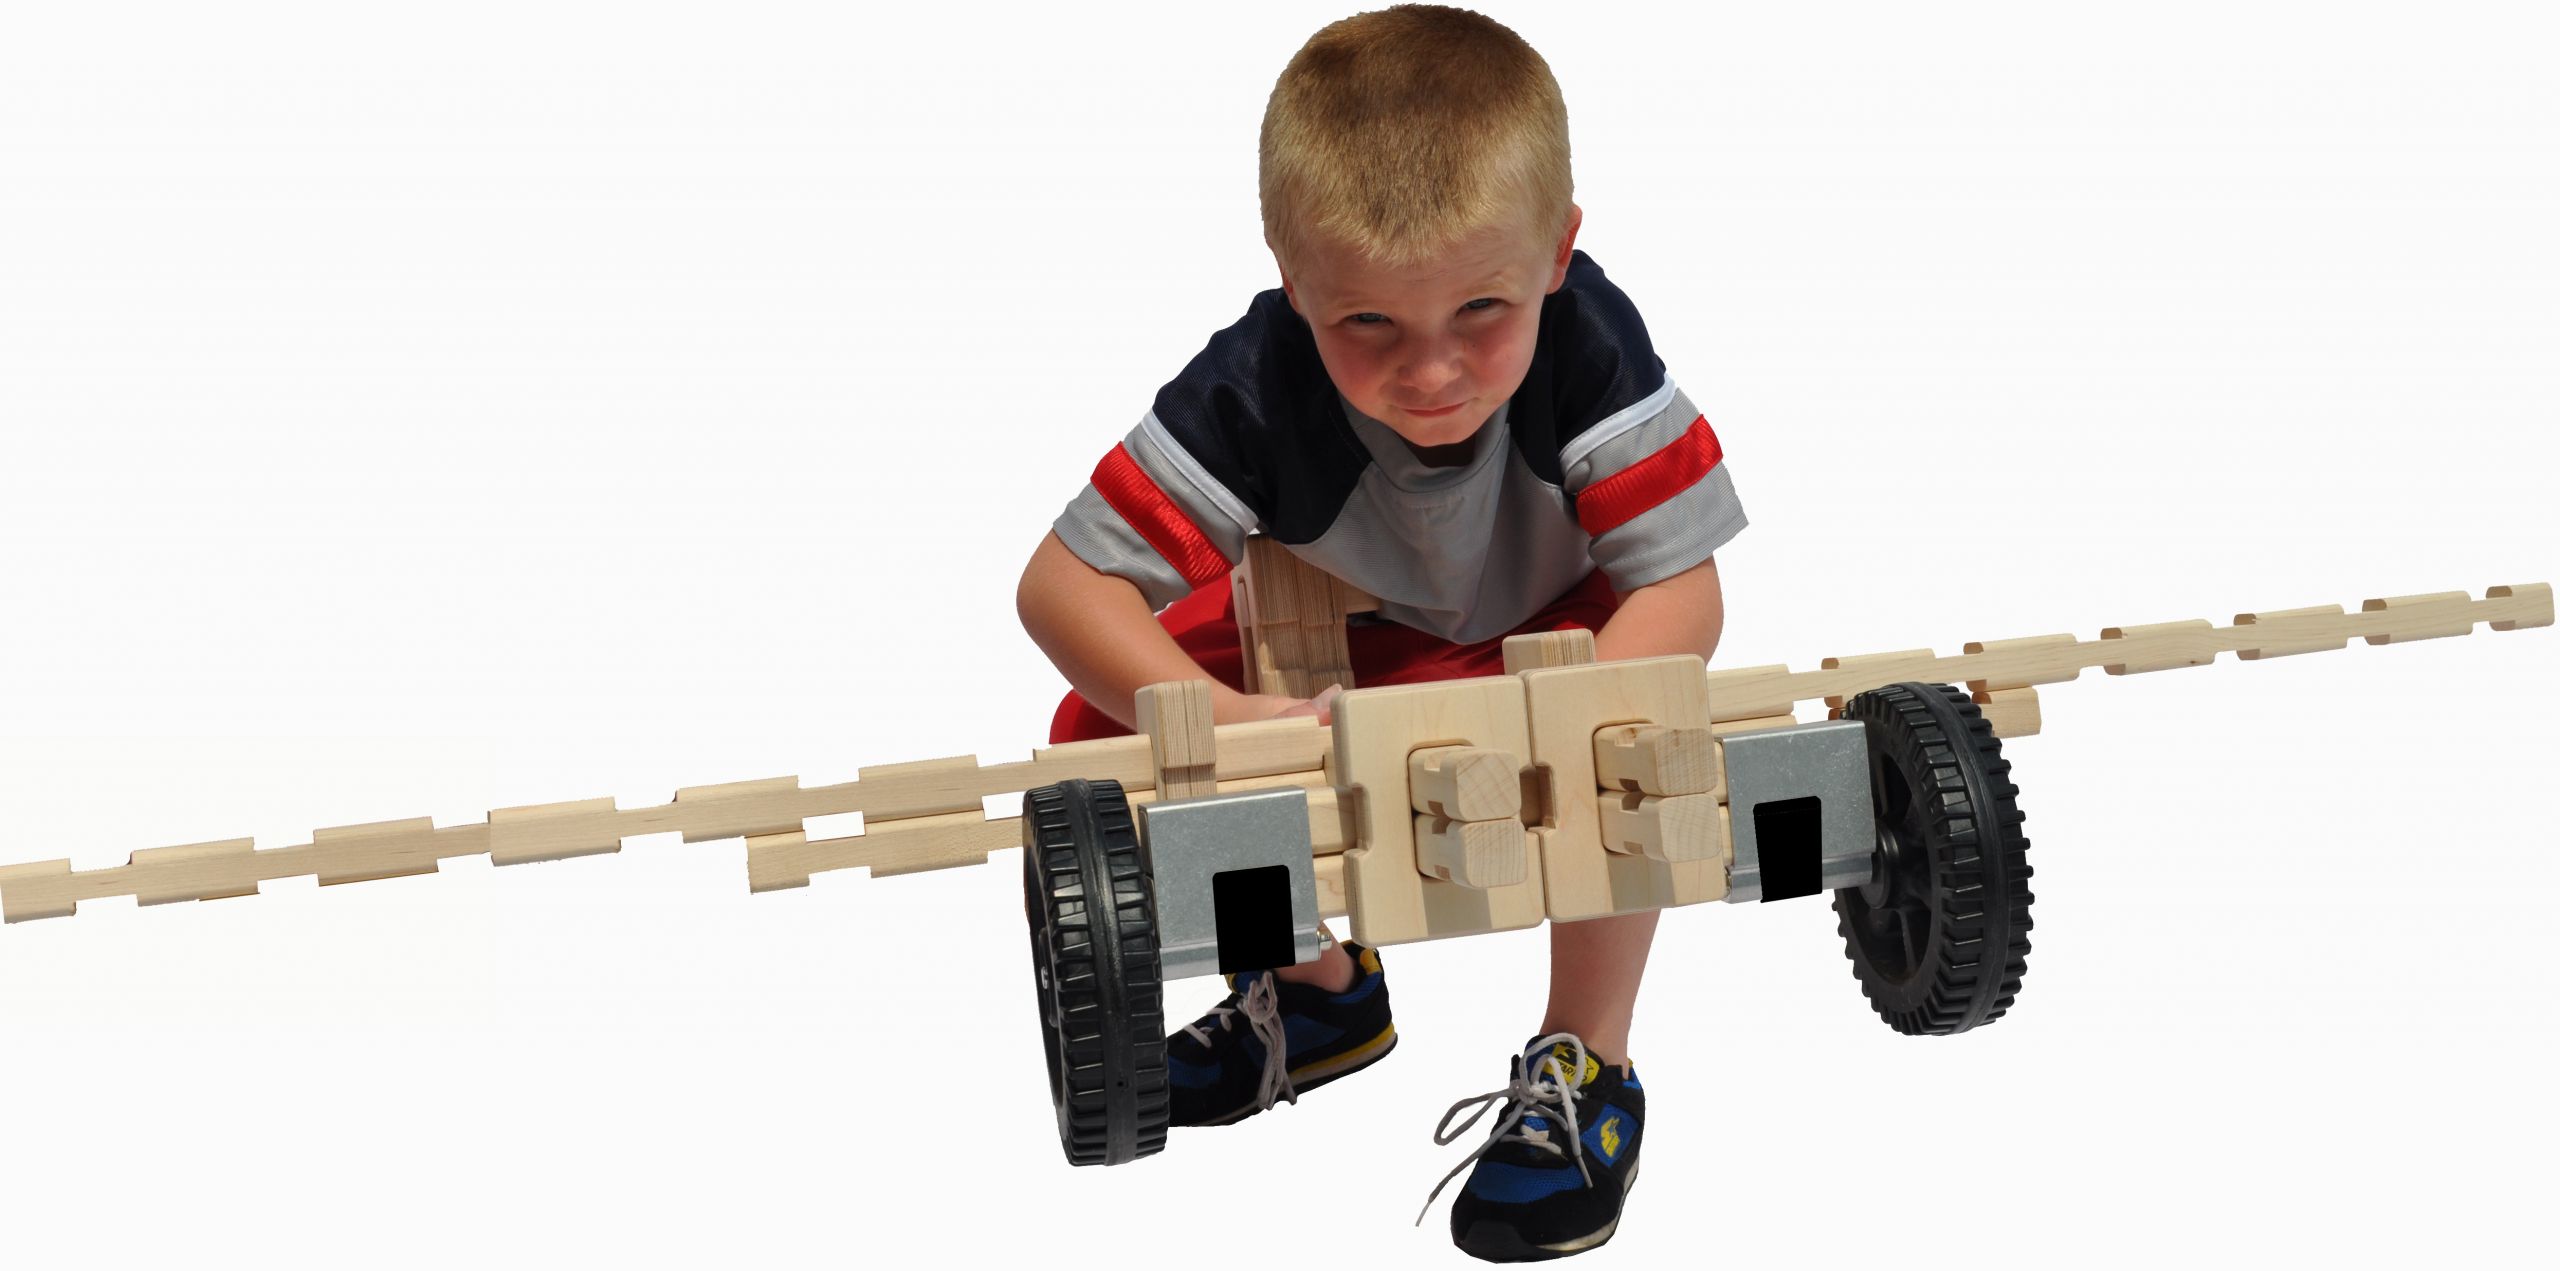 DIY Wooden Toys Plans
 Build Free Wooden Toy Jet Plans DIY cool simple woodshop